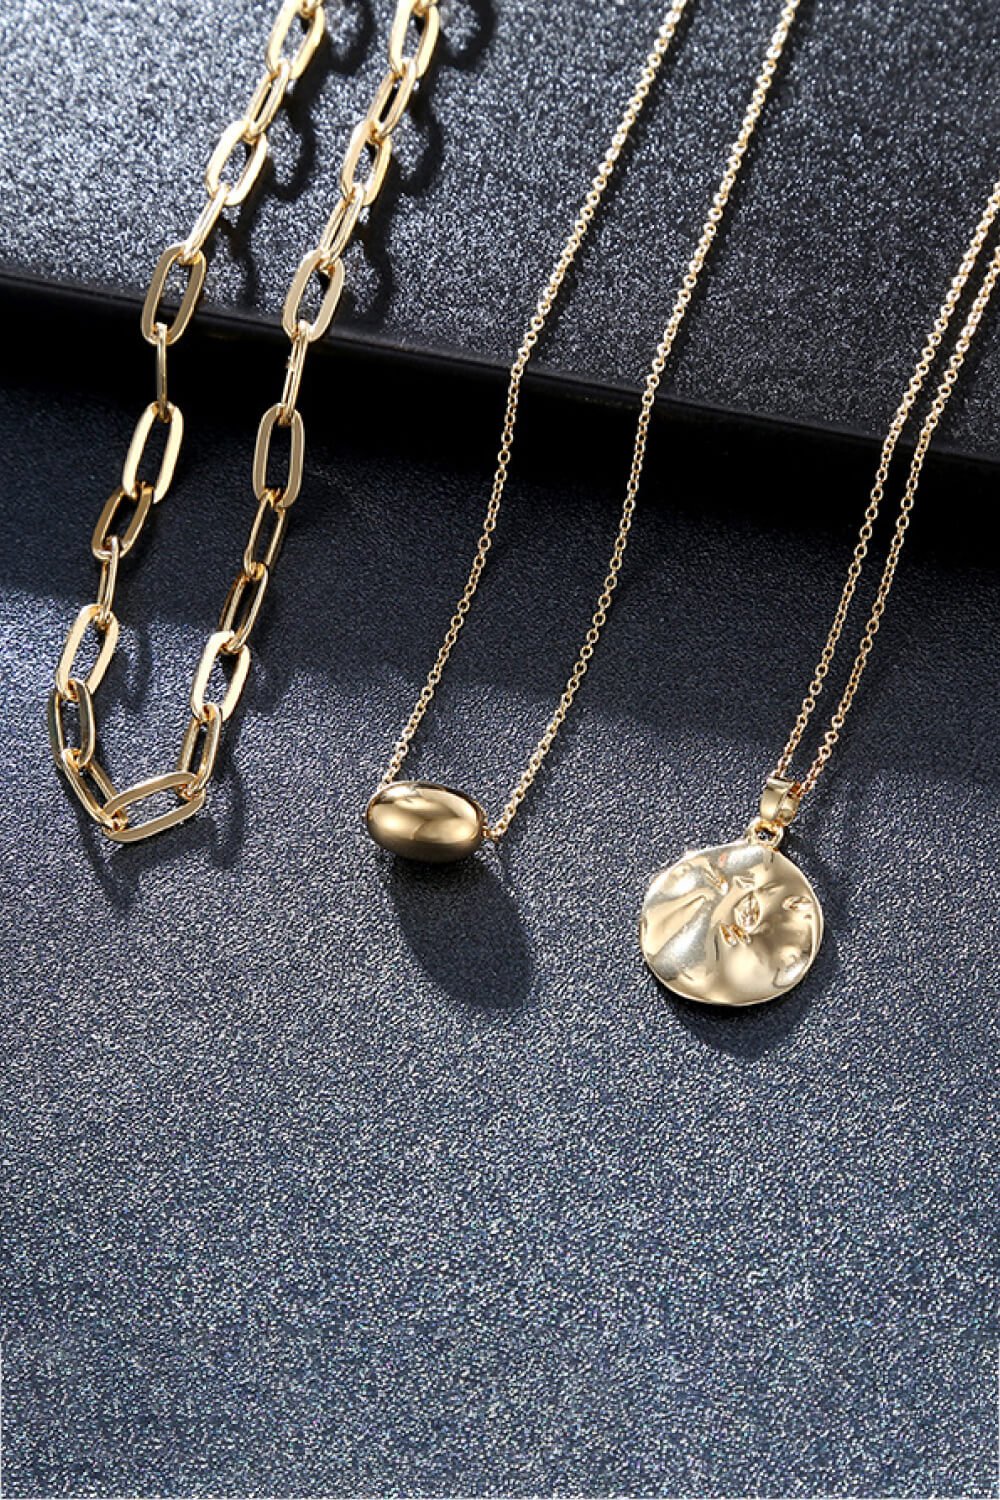 18K Gold Plated 3-Piece Pendant Necklace SetNecklaceBeach Rose Co.